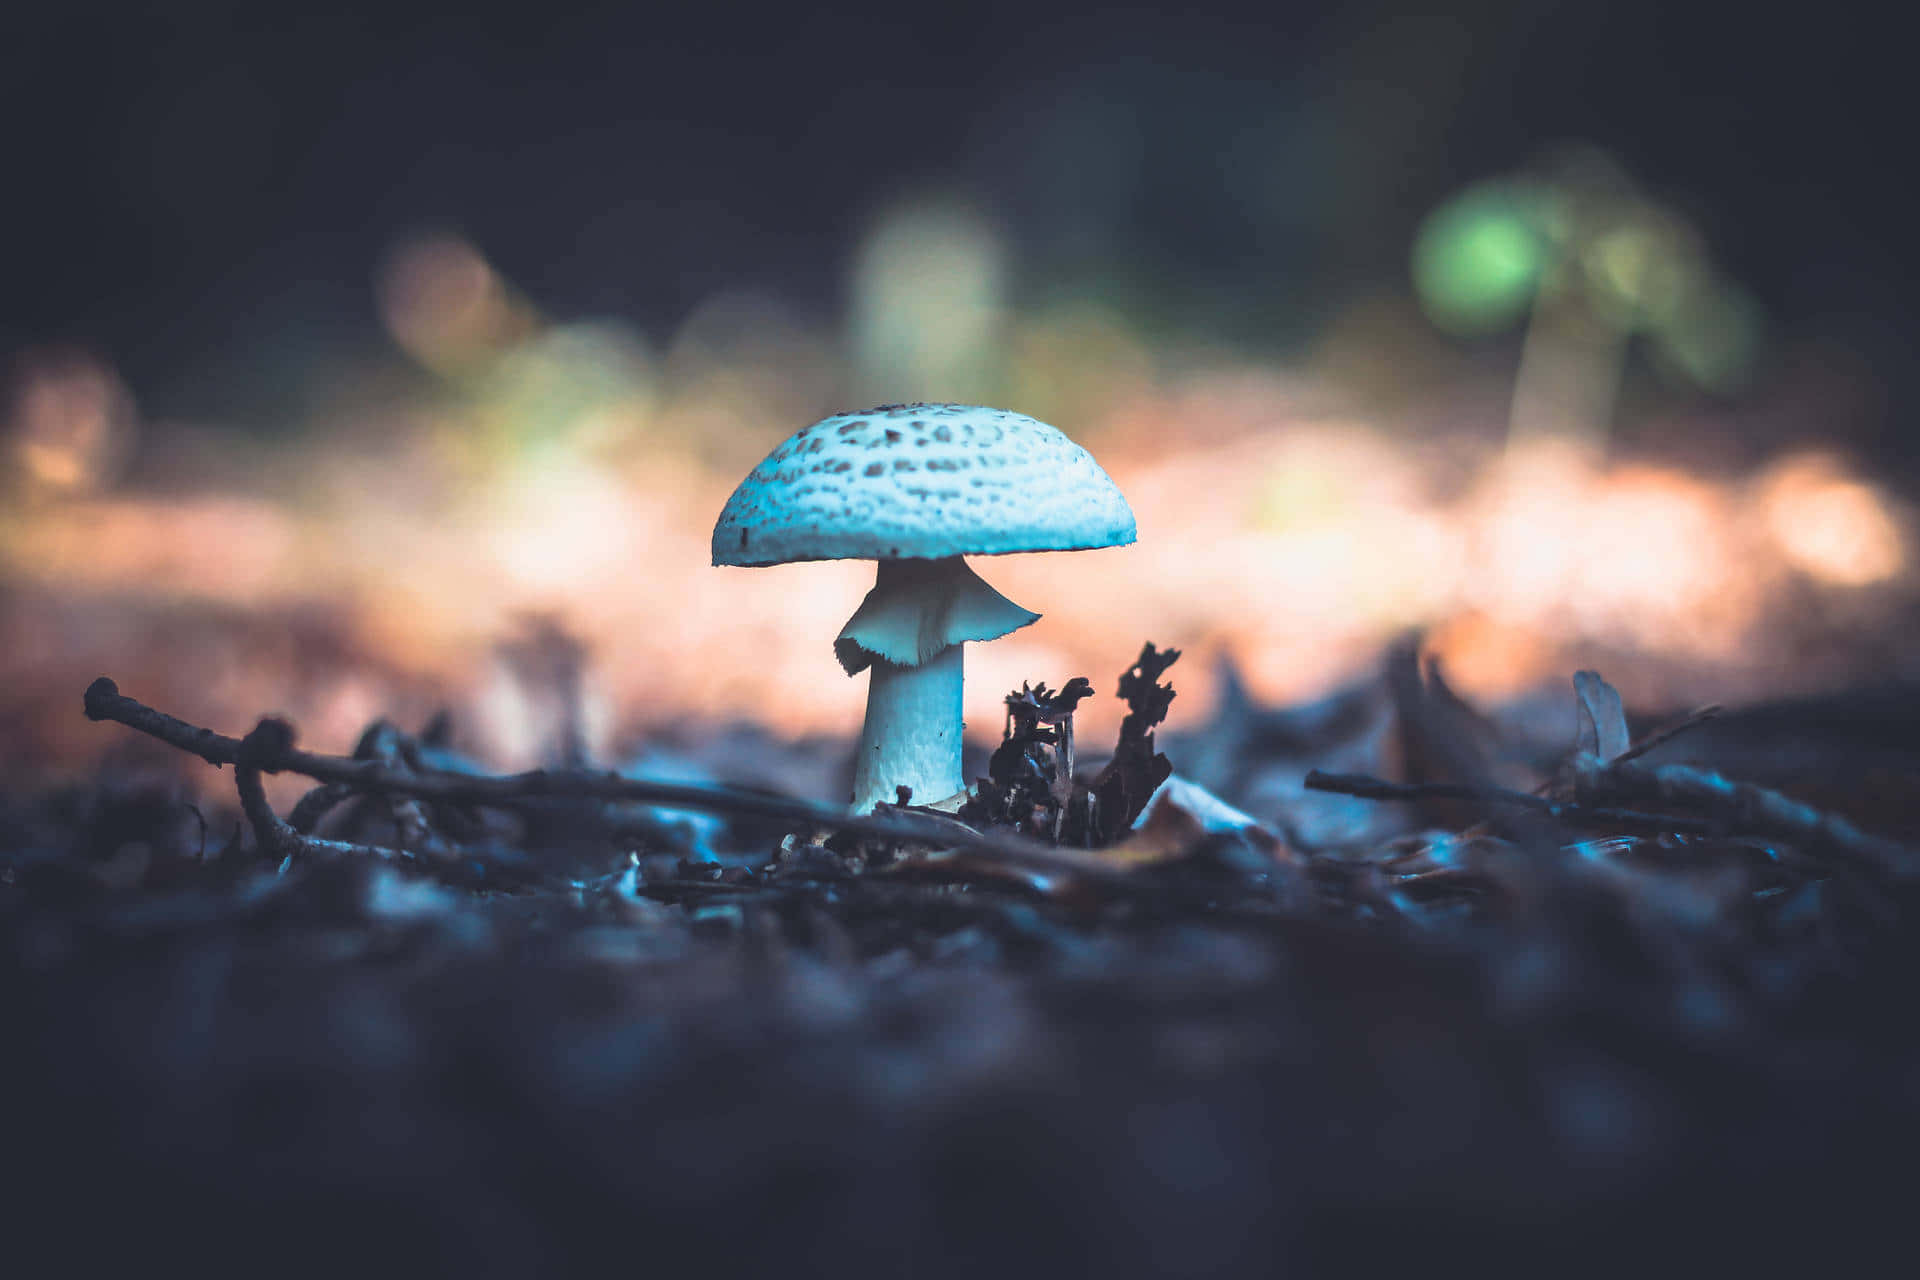 Parasol Mushroom Fungus Growing On Soil Background